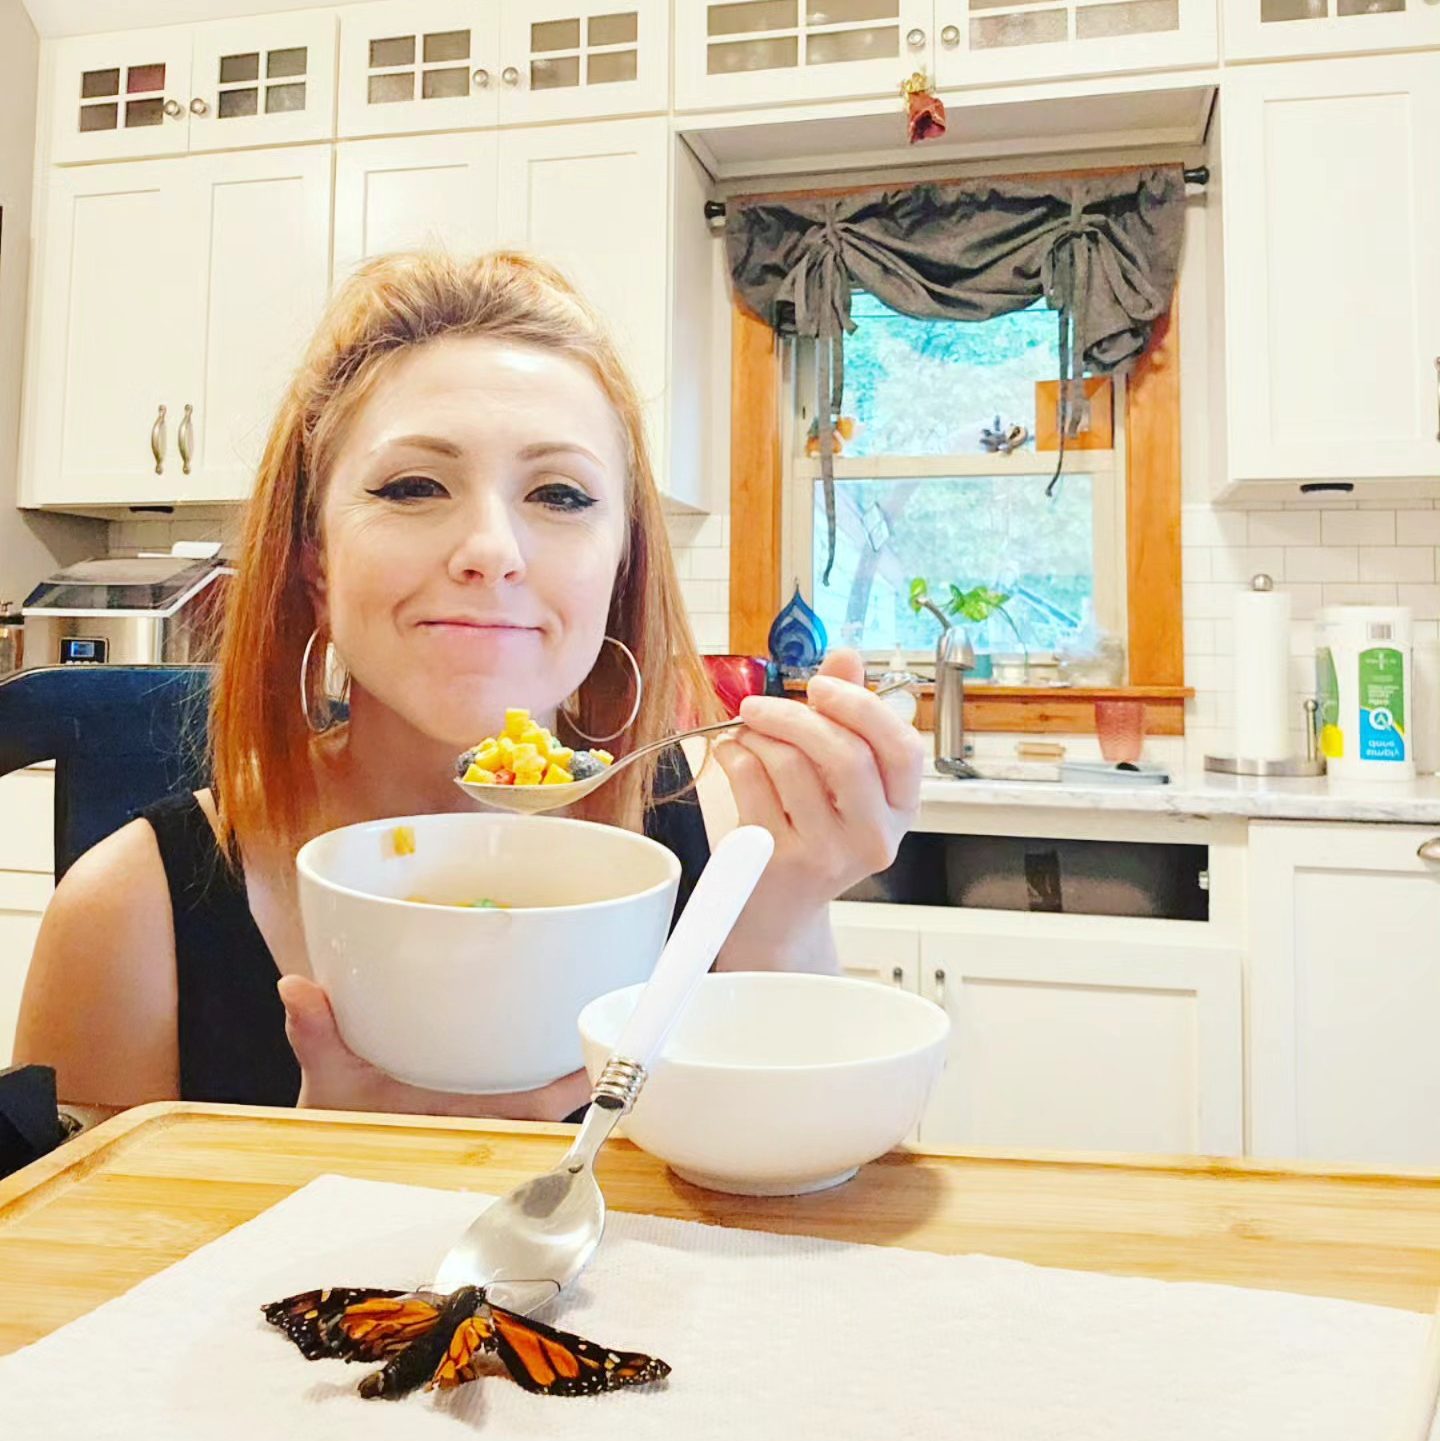 Woman eats breakfast with a butterfly.